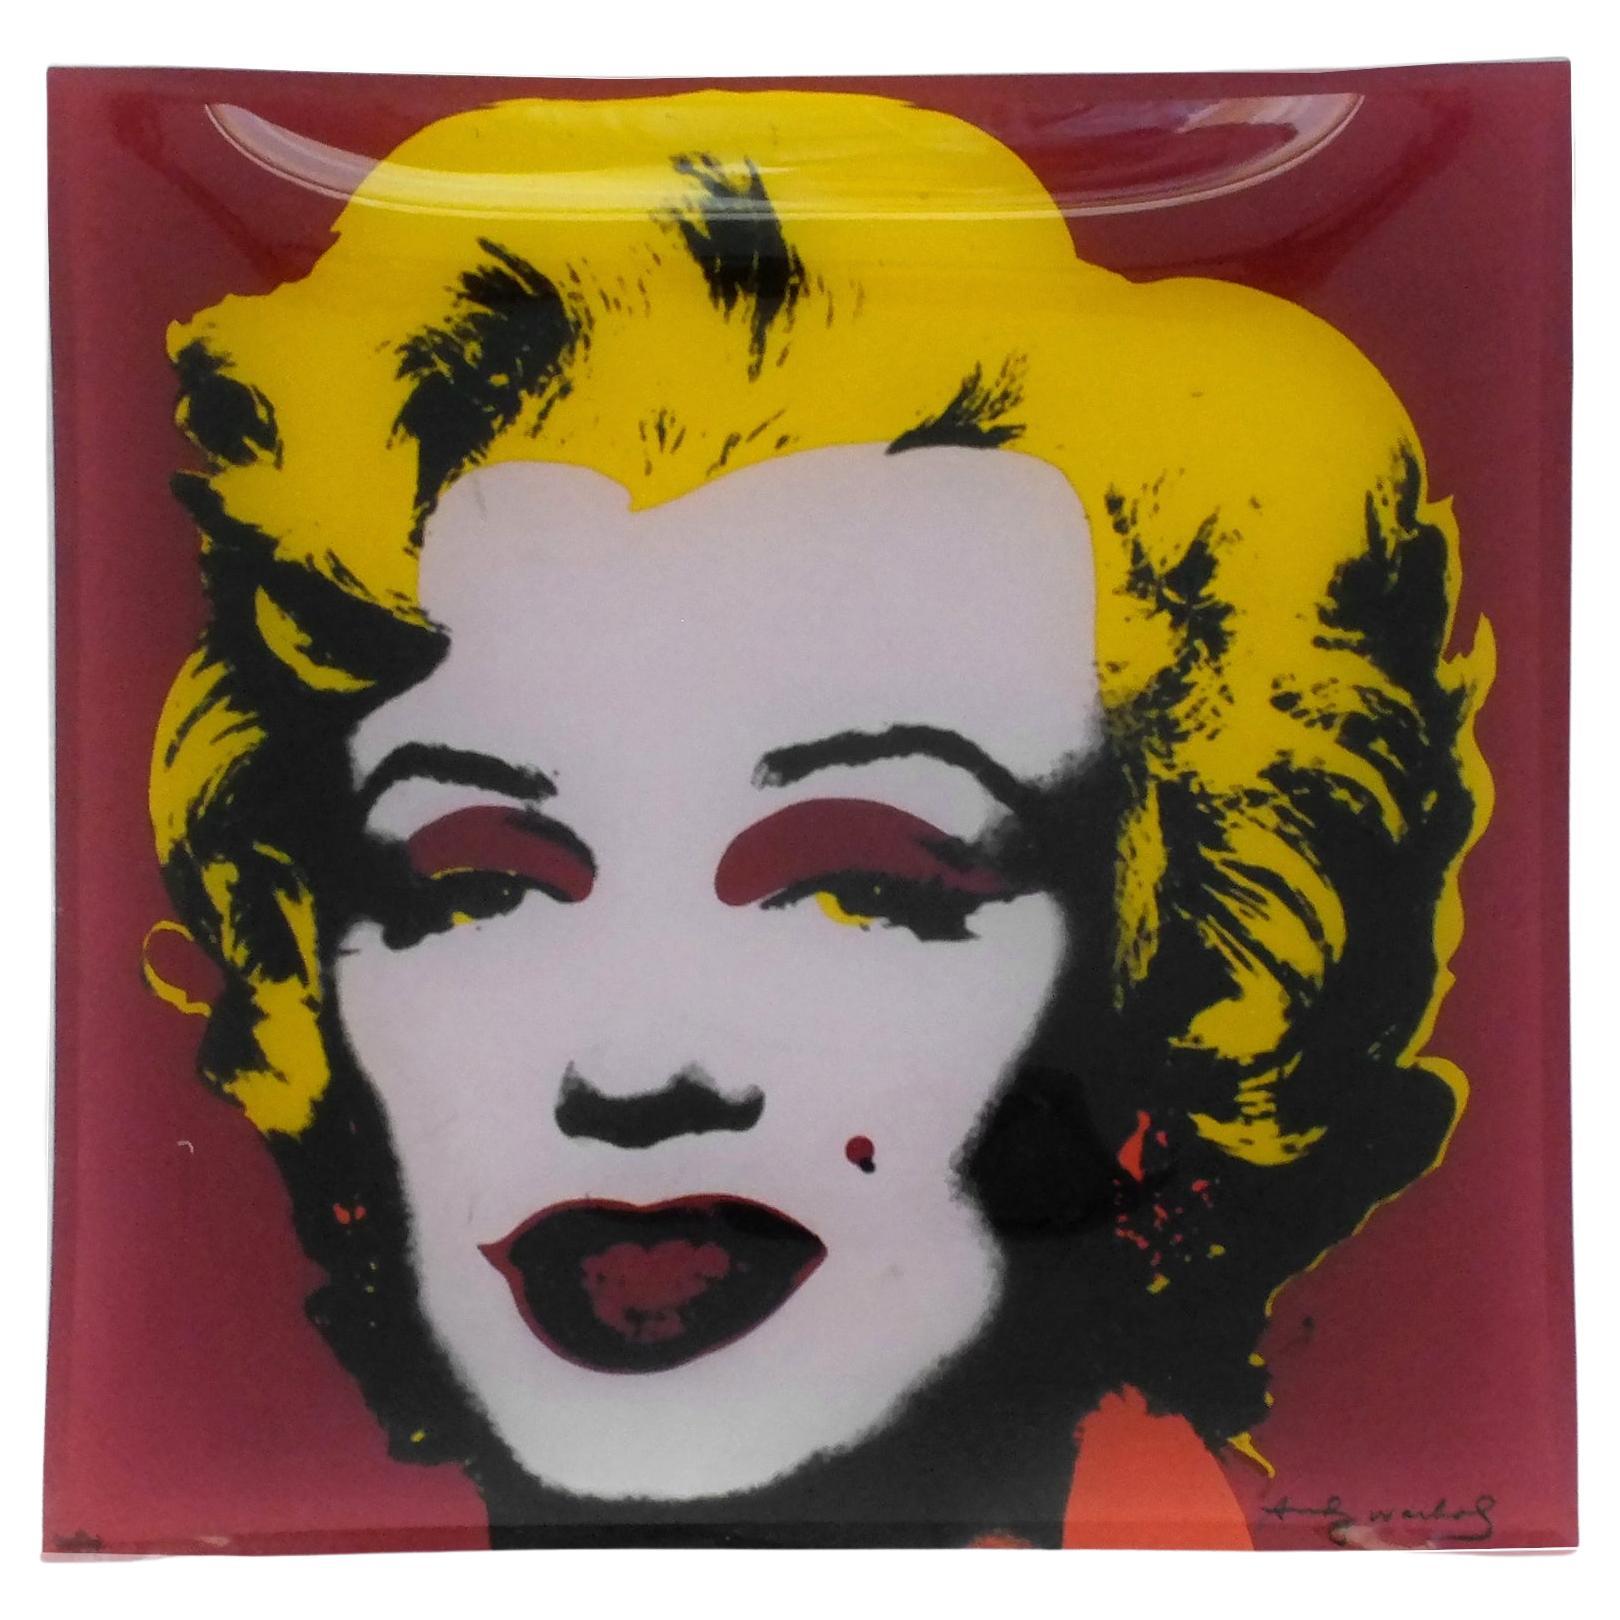 Rosenthal Marilyn Monroe Celebrity Series Andy Warhol, quadratischer Vintage-Glasteller